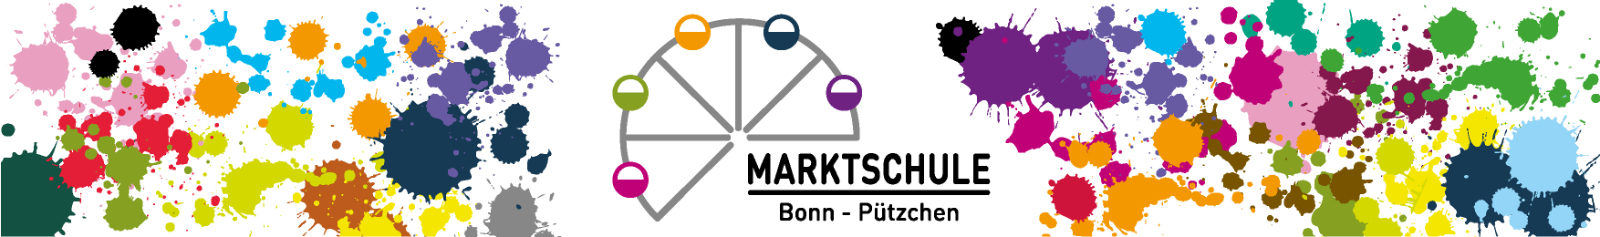 Marktschule Bonn